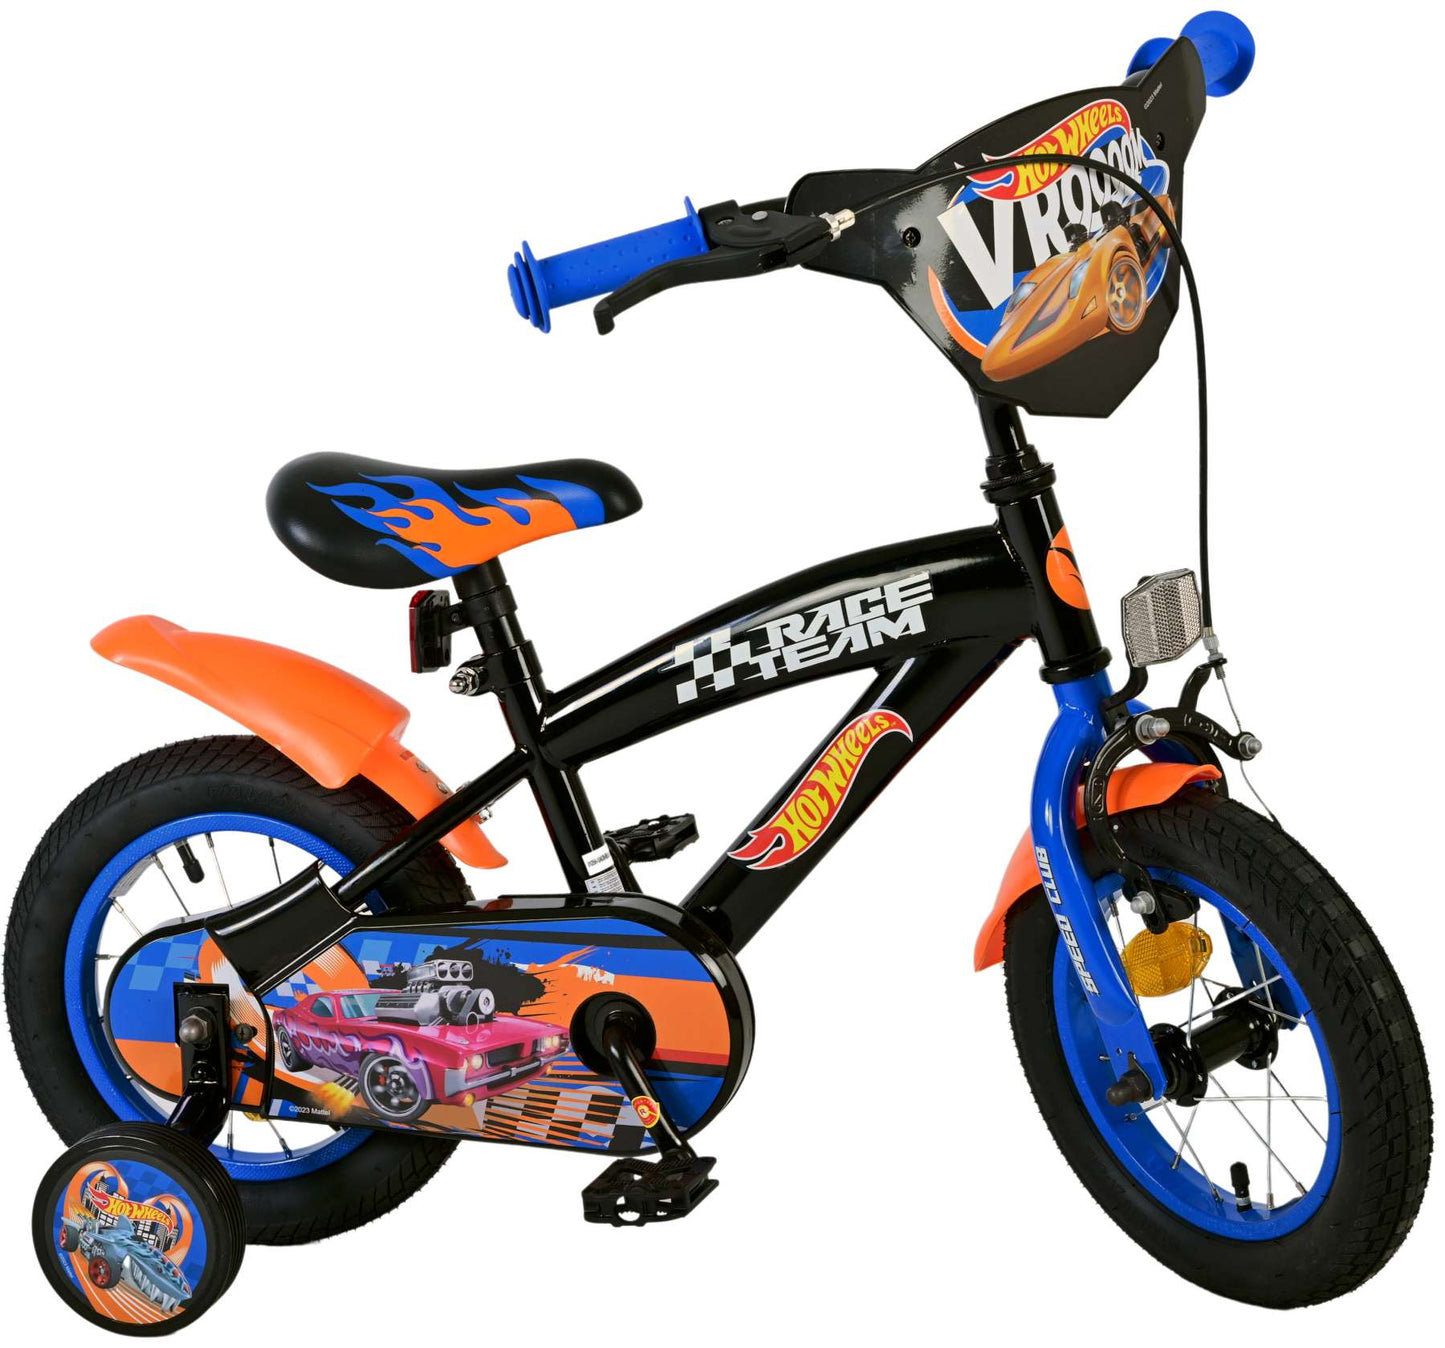 Hot Wheels Hot wheels 12 fiets zwart oranje blauw 31256